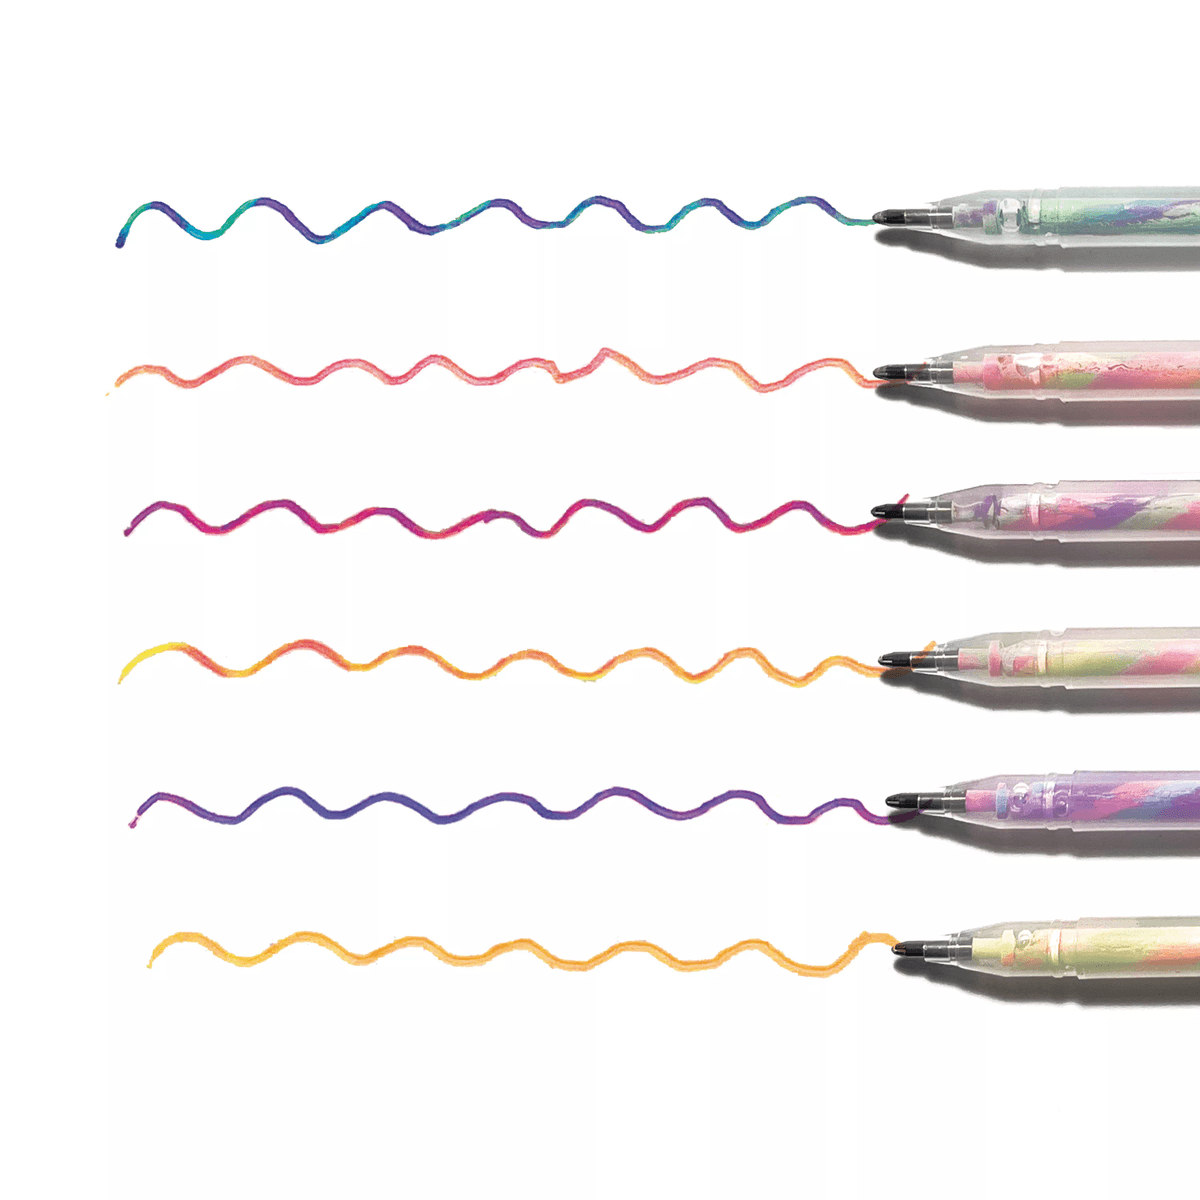 Ooly Radiant Writers Glitter Gel Pens